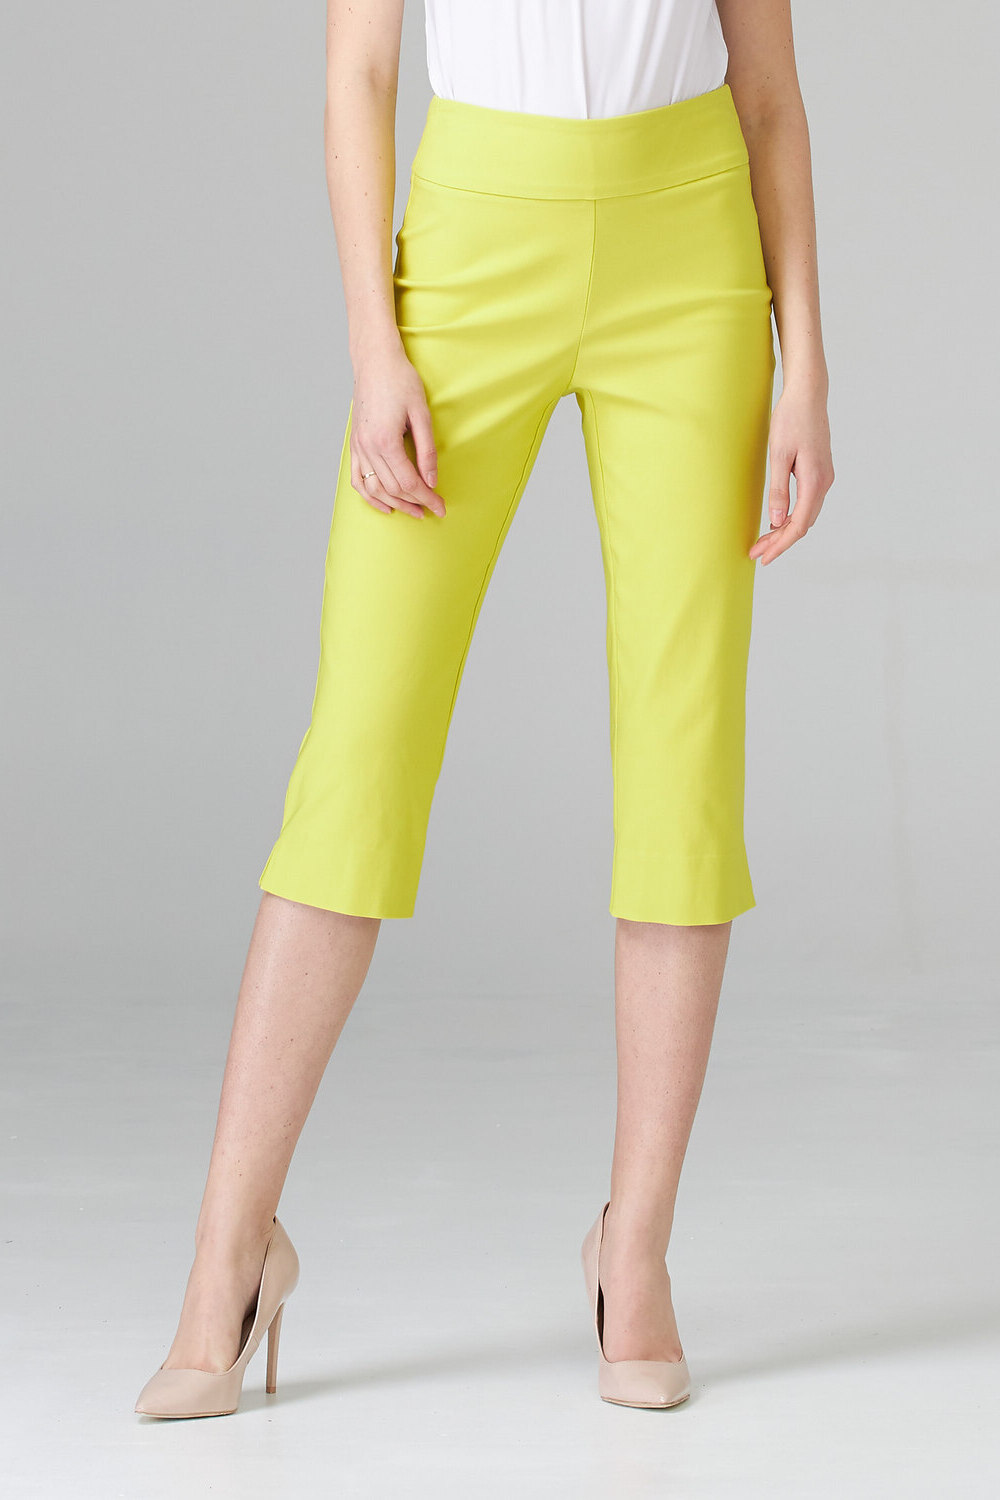 Joseph Ribkoff Pantalon Style 202350. Limonade